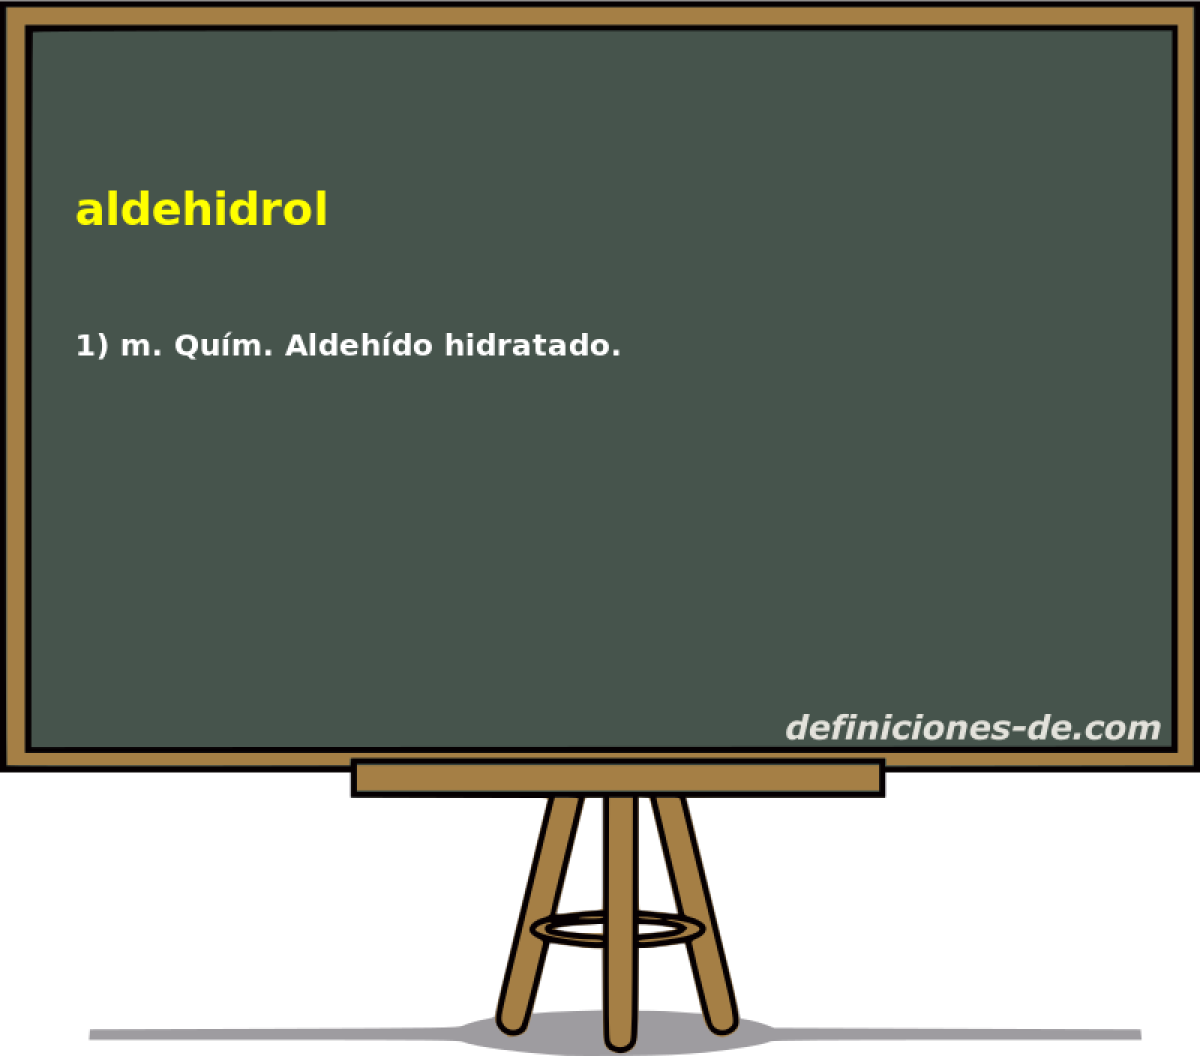 aldehidrol 